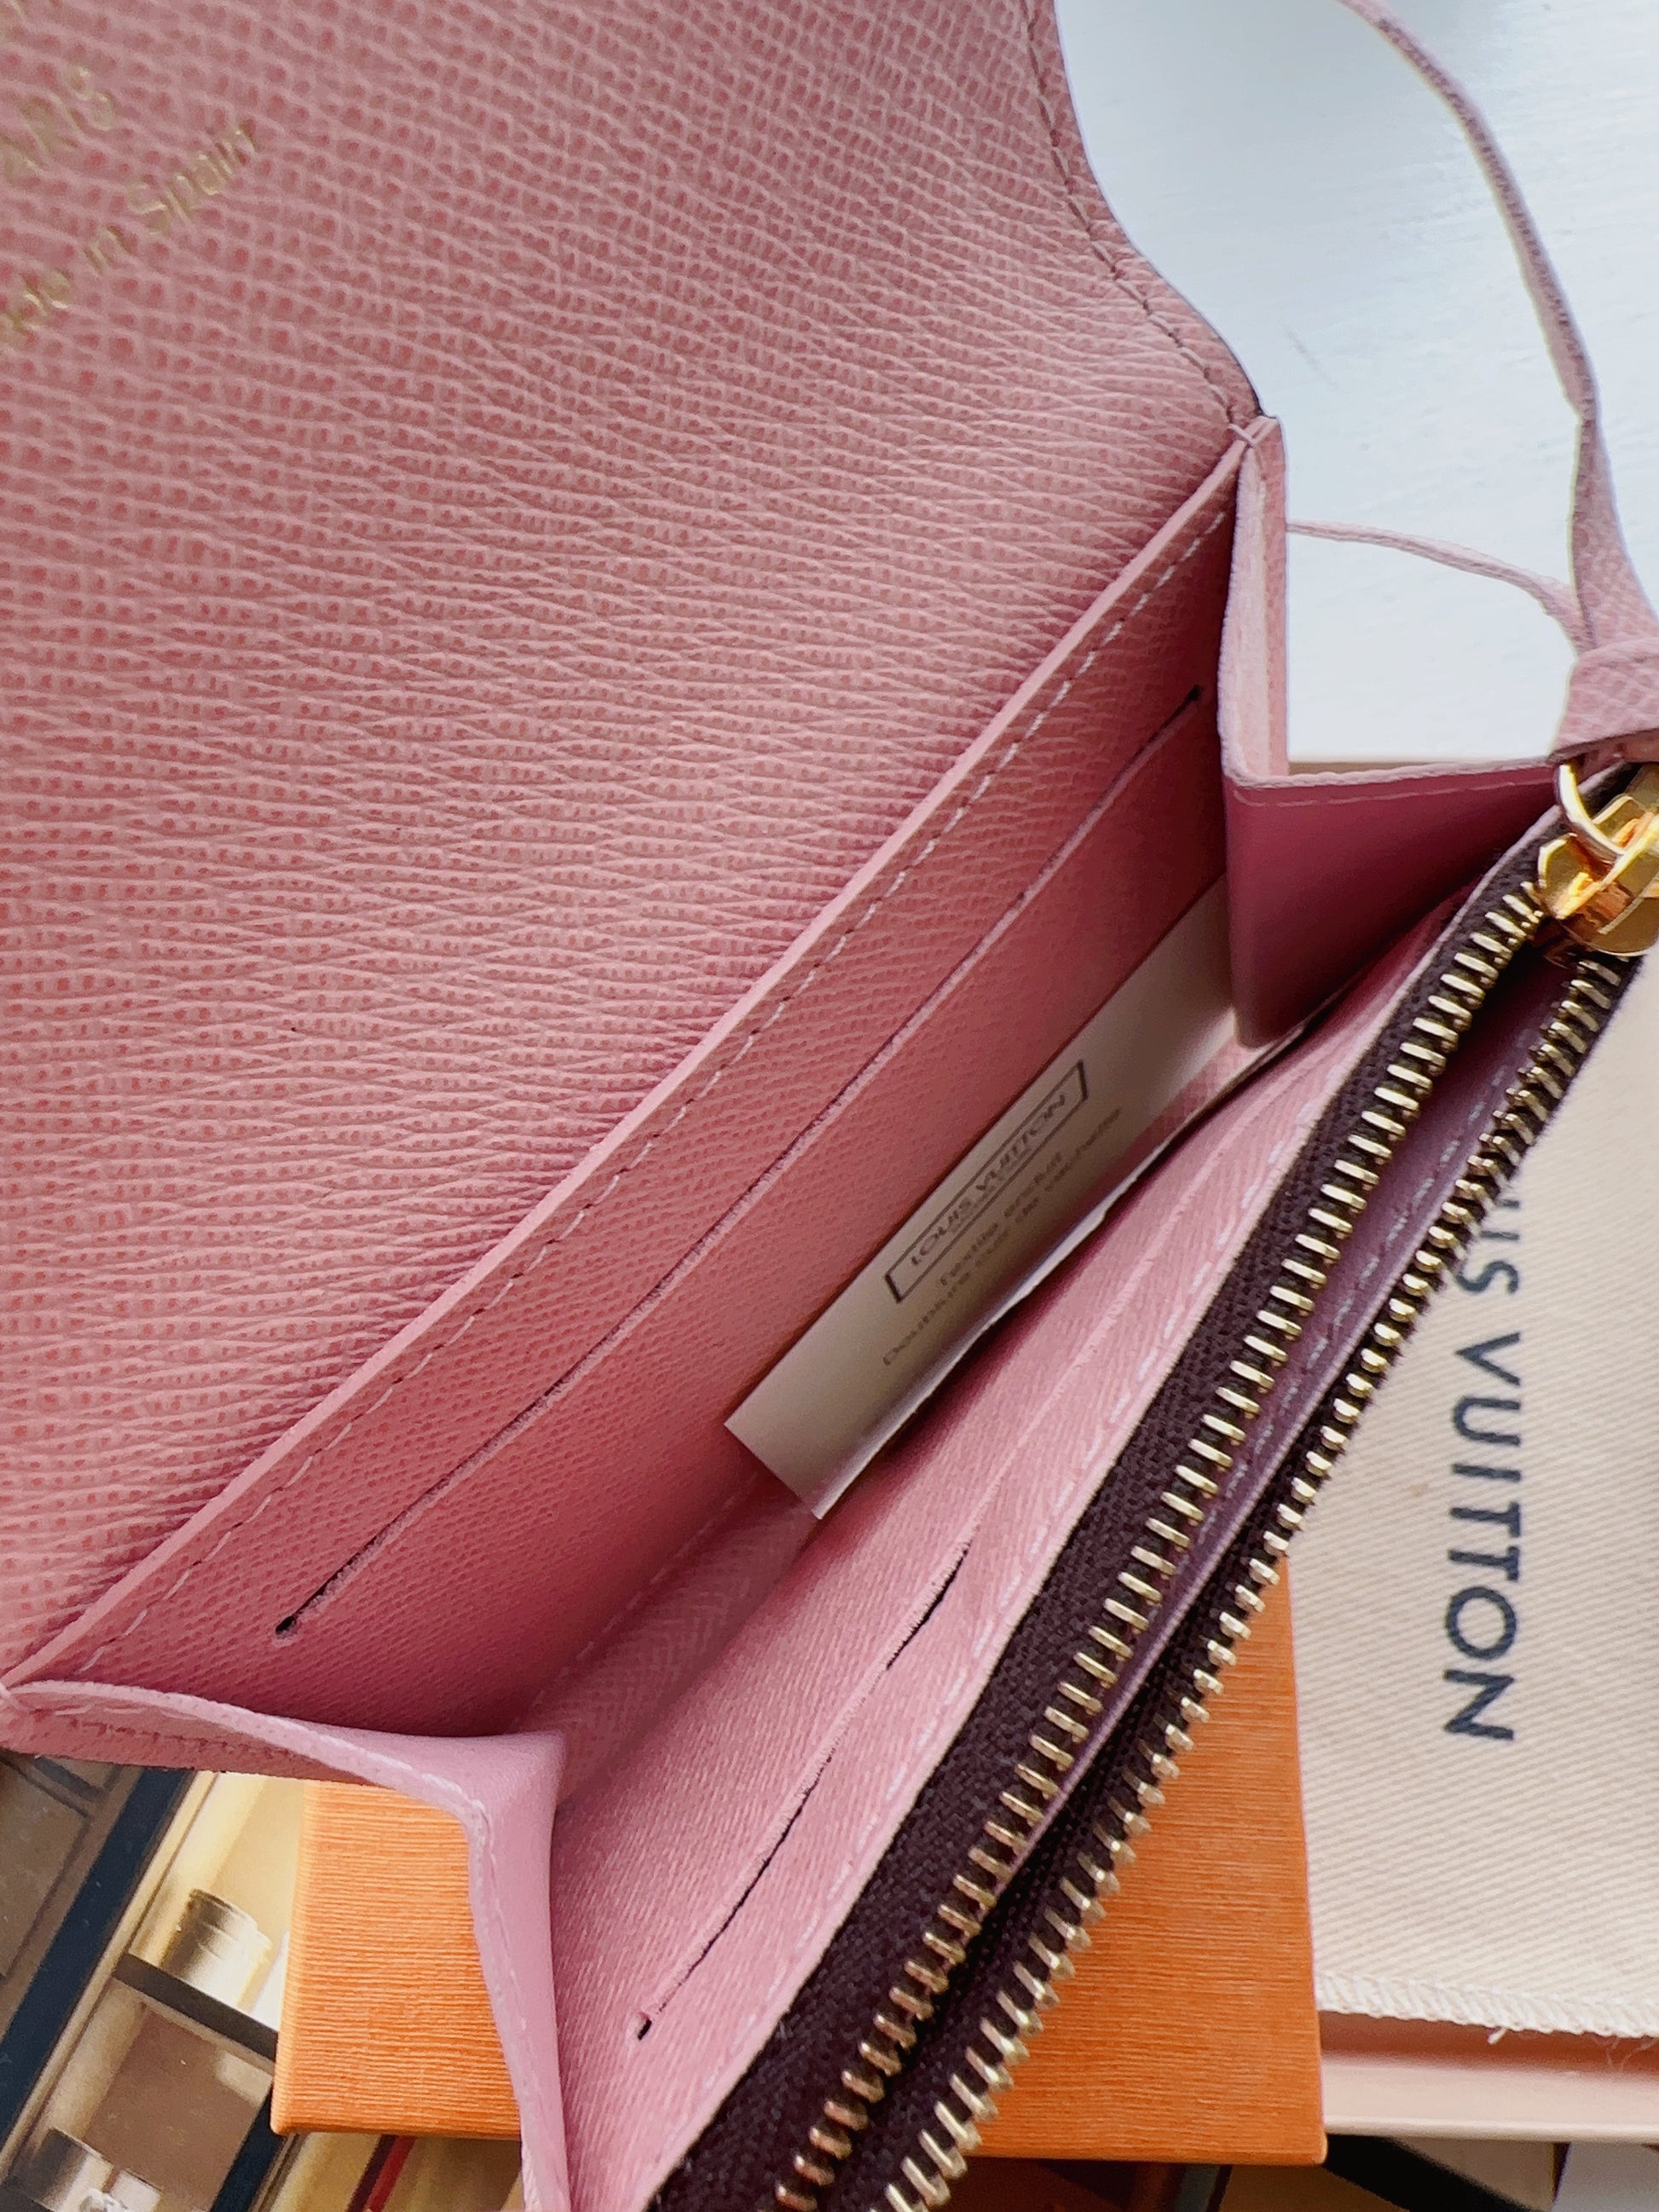 rosalie coin purse pink